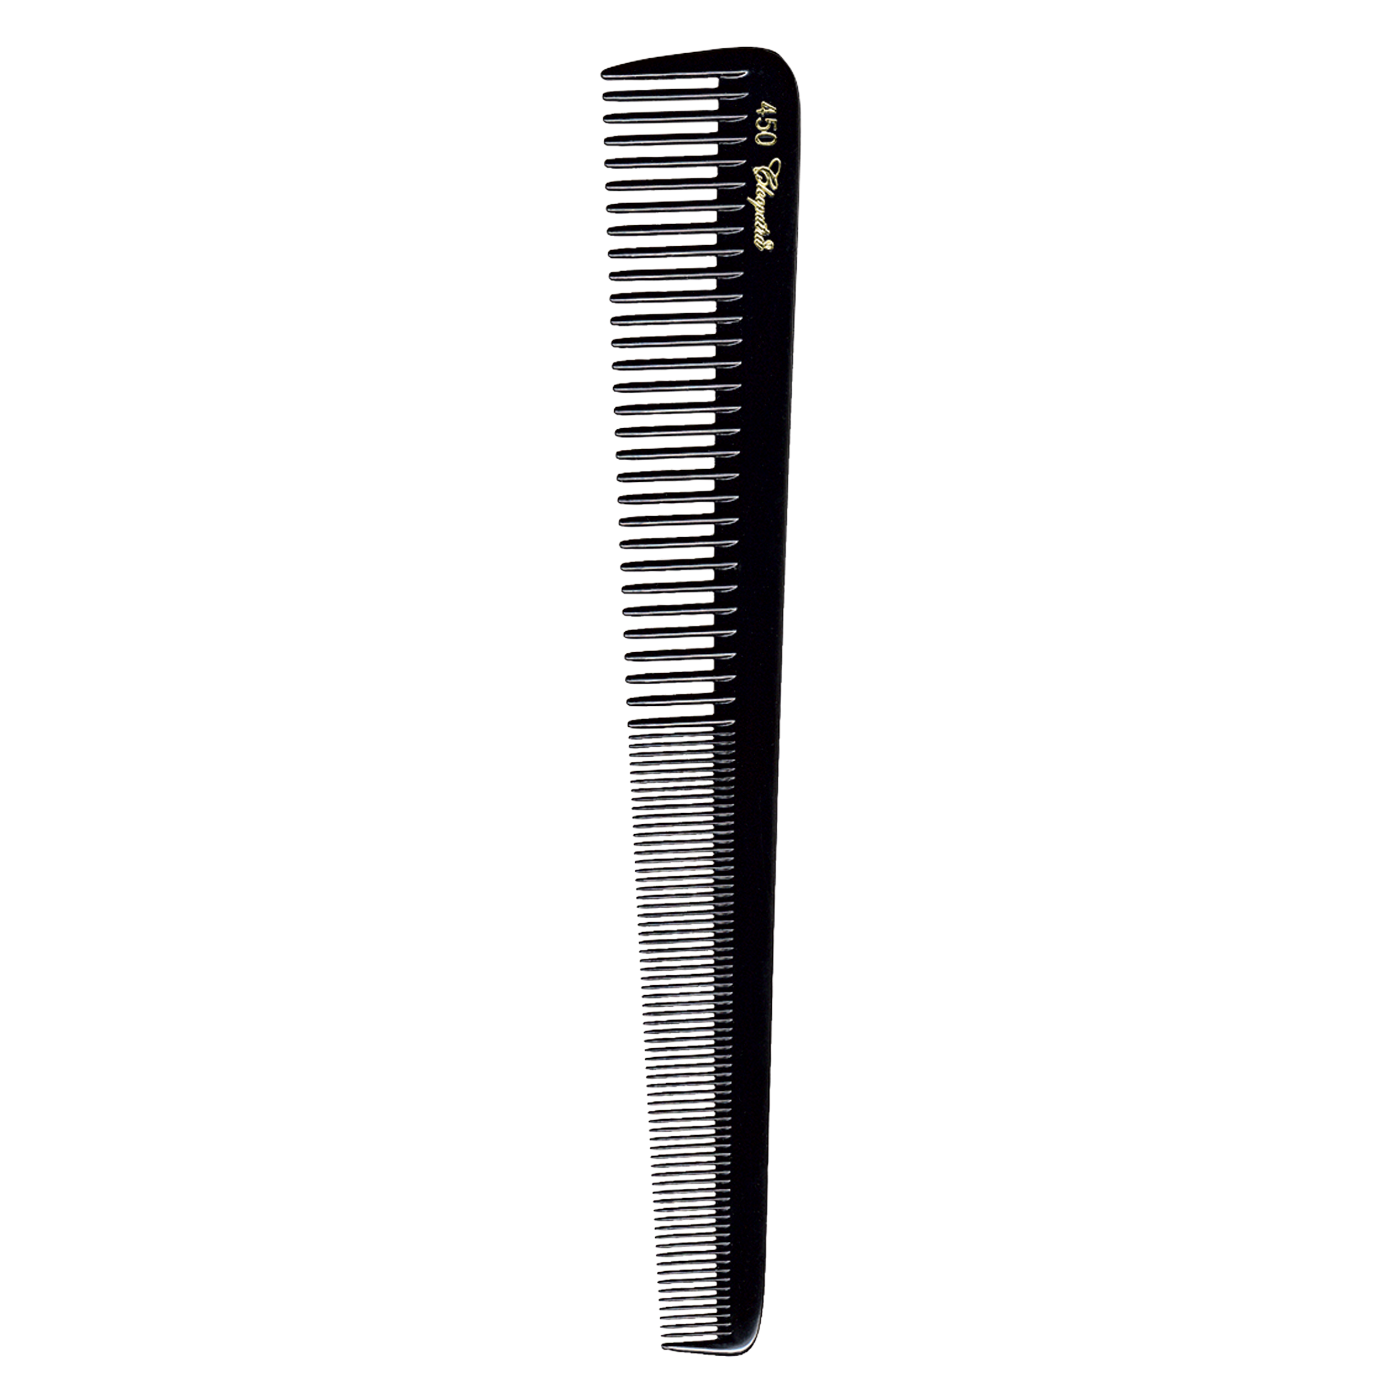 Tapering/Barber Styler Comb - 7 1/2"